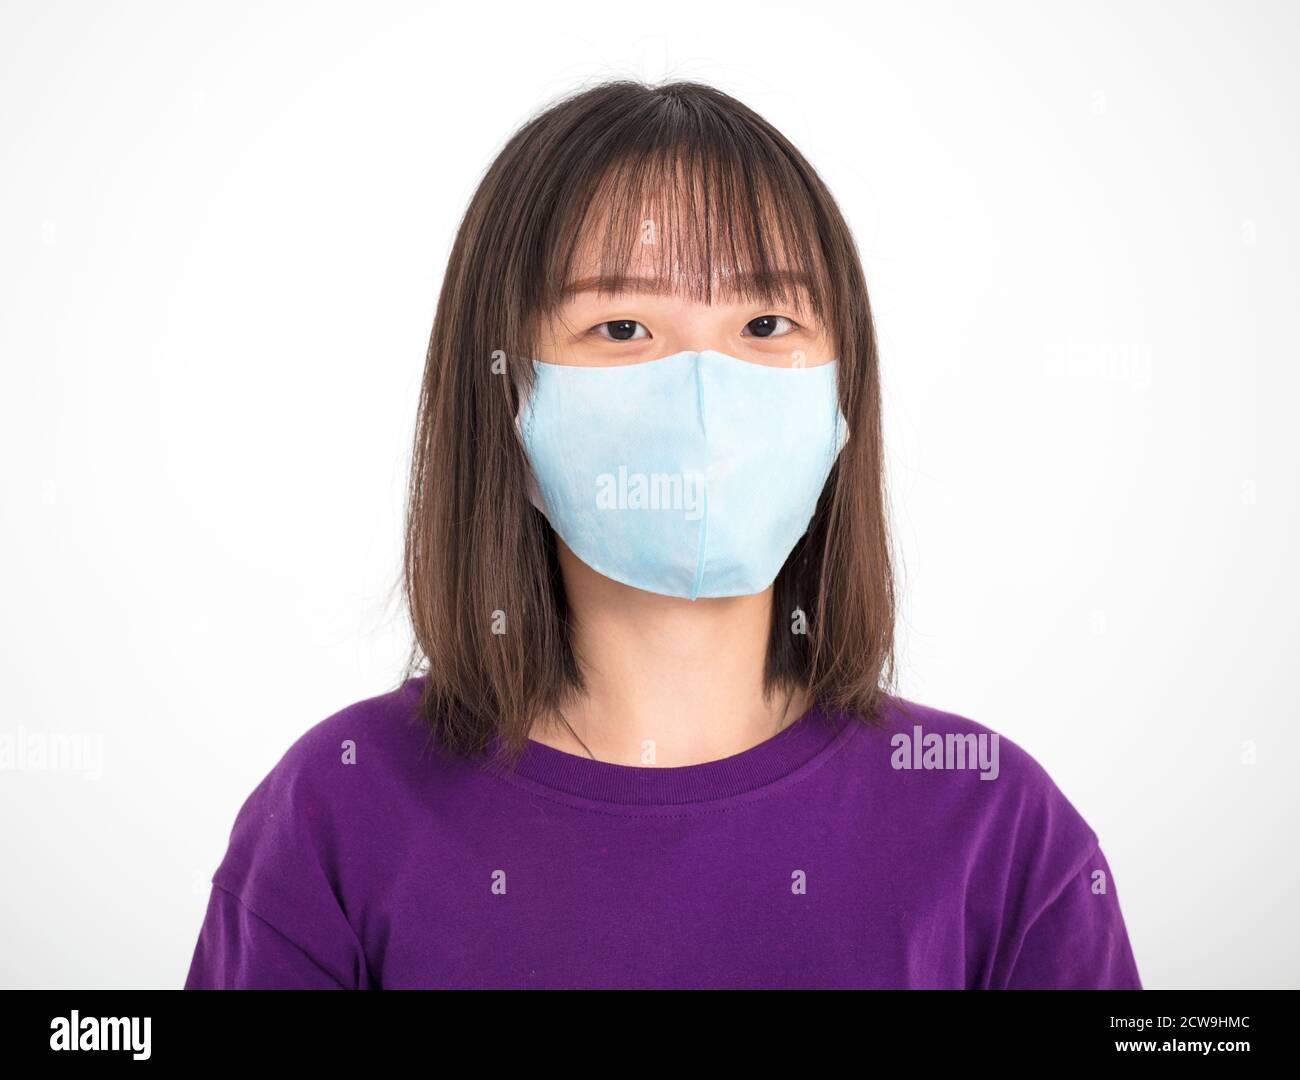 Asian teenager girl wearing medical face mask Stock Photo